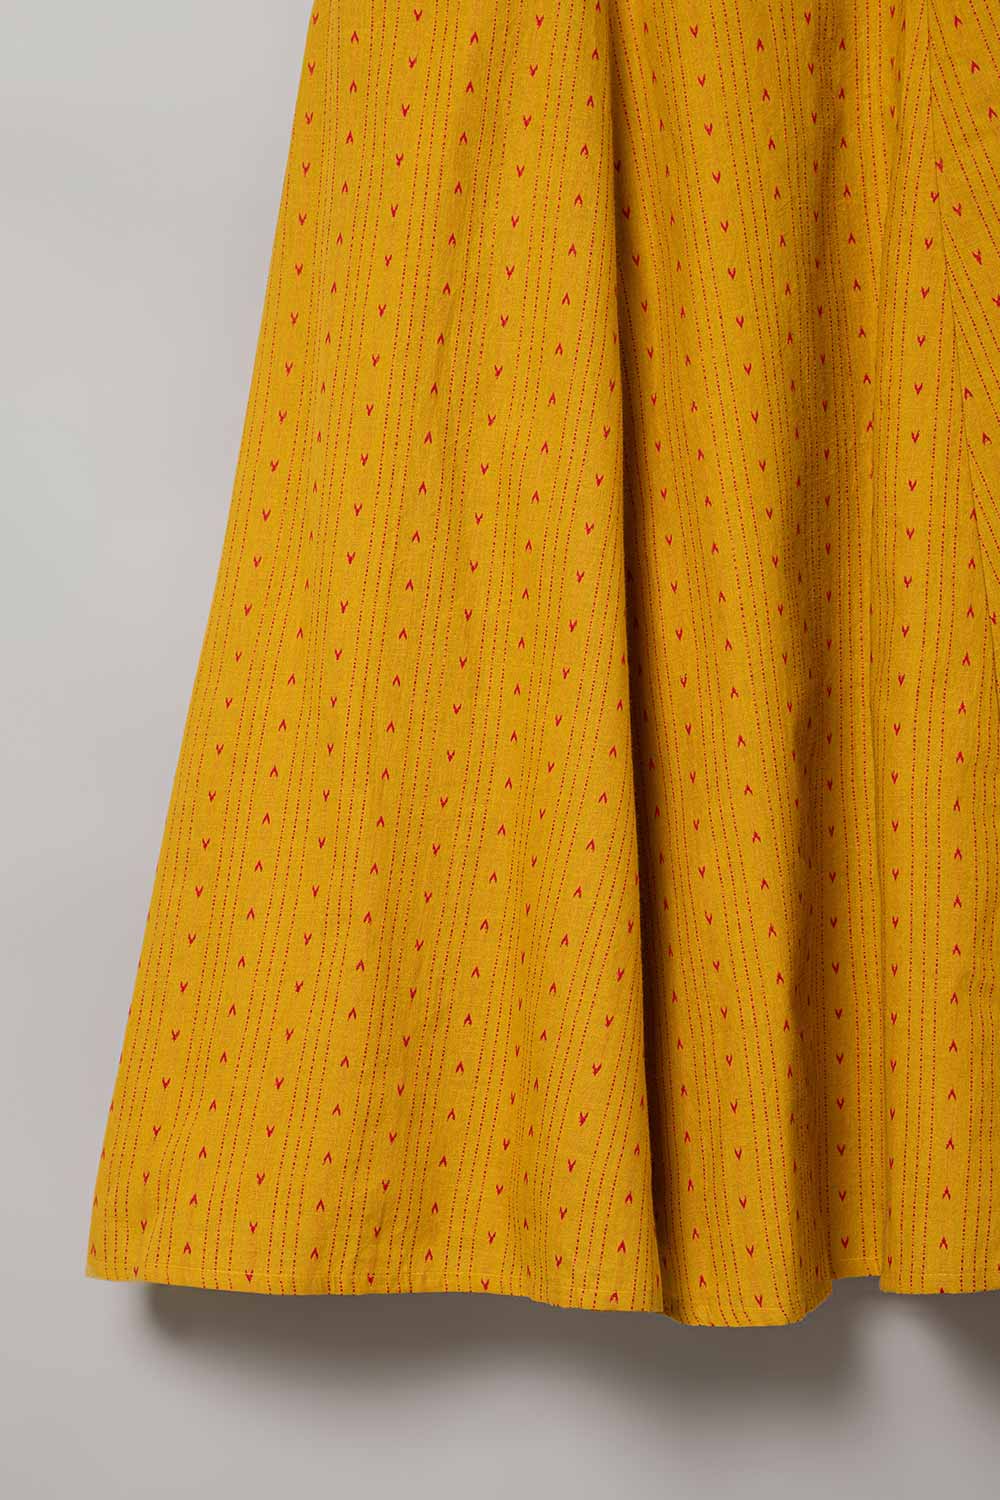 Chittythalli Puff Sleeve With Minimal Embroidery Top & Kali Skirt  Pavadai Set -  Yellow   - PS50